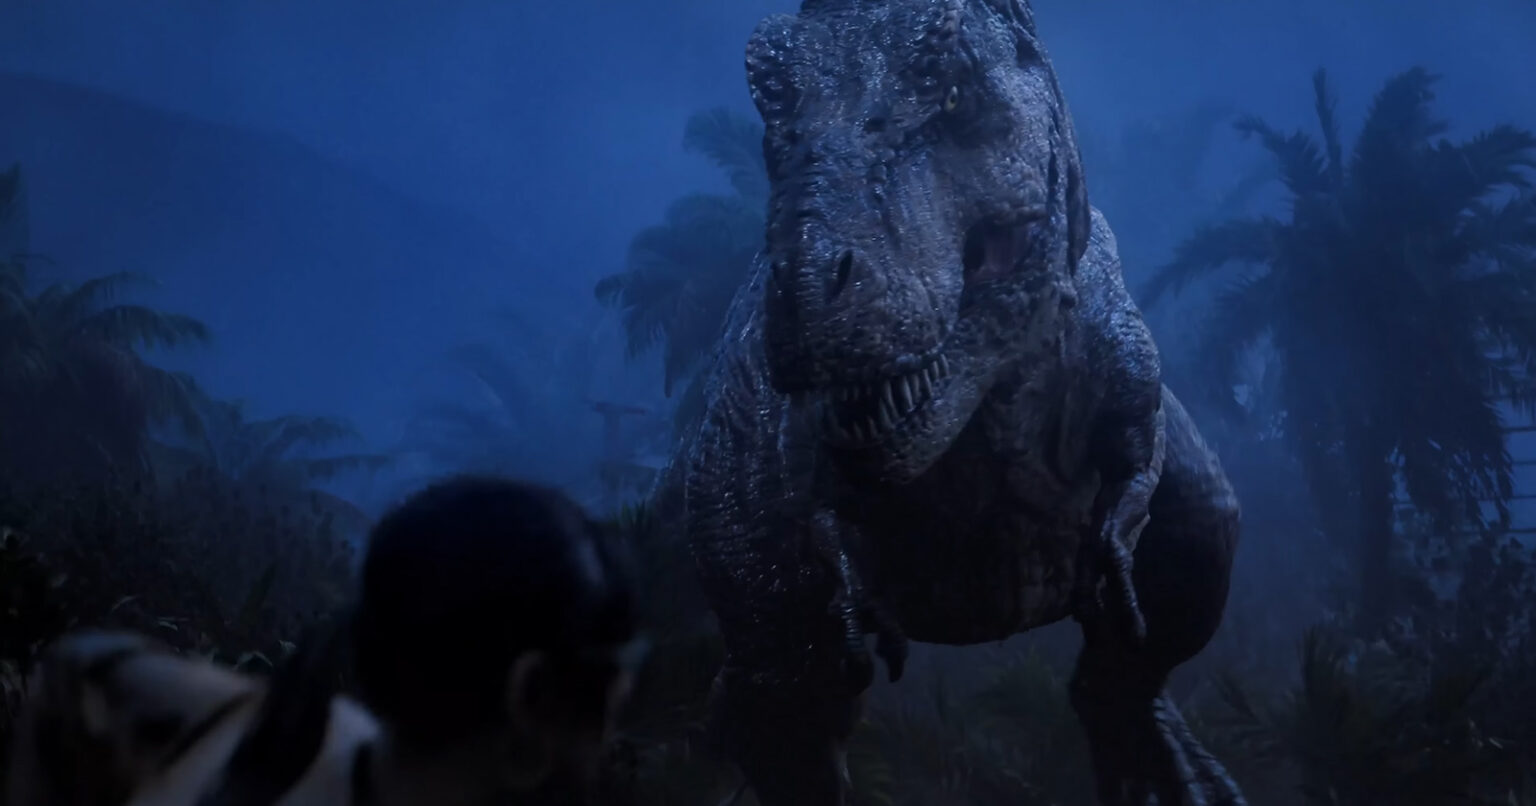 Jurassic Park: Survival announced, here's the trailer